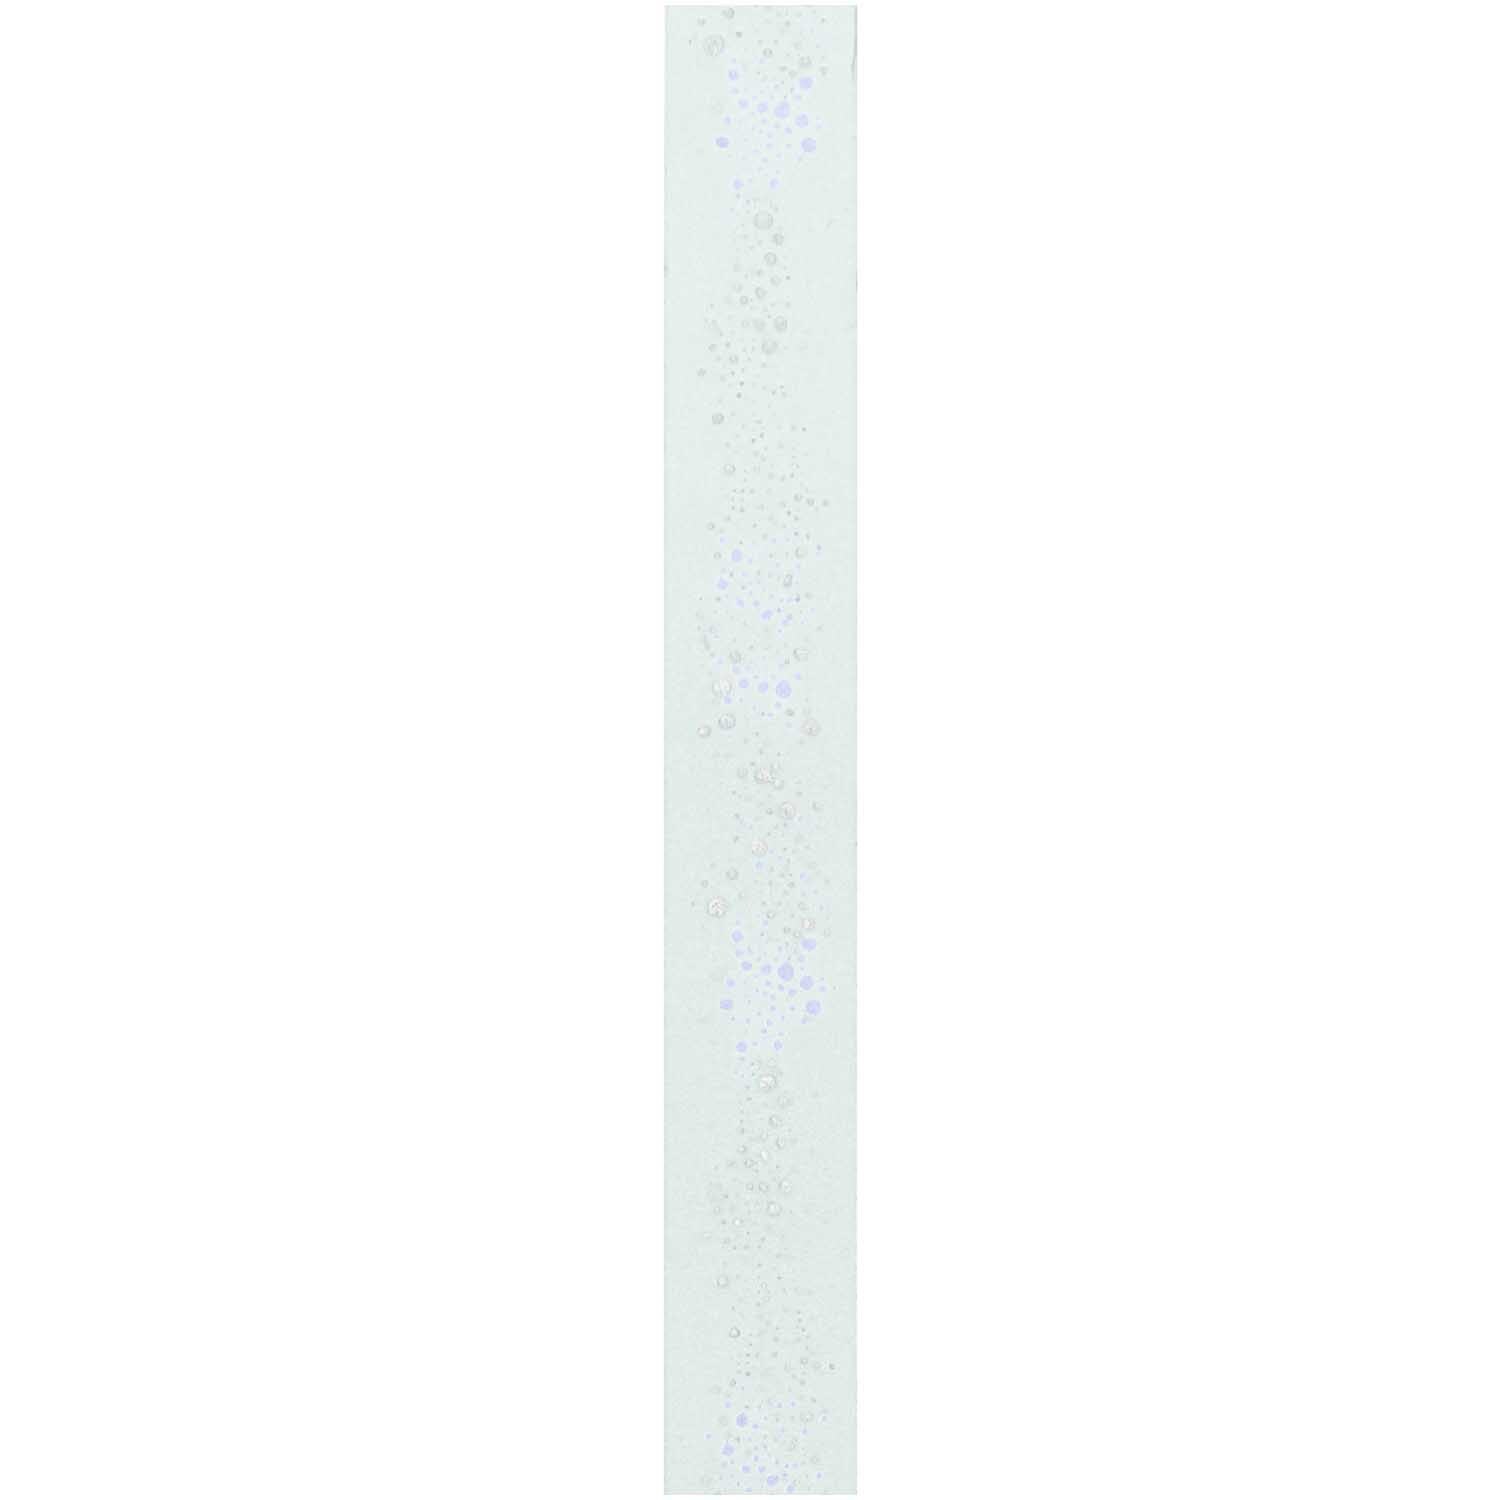 Paper Poetry Tape Mermaid Bubbles 1,5cm 10m